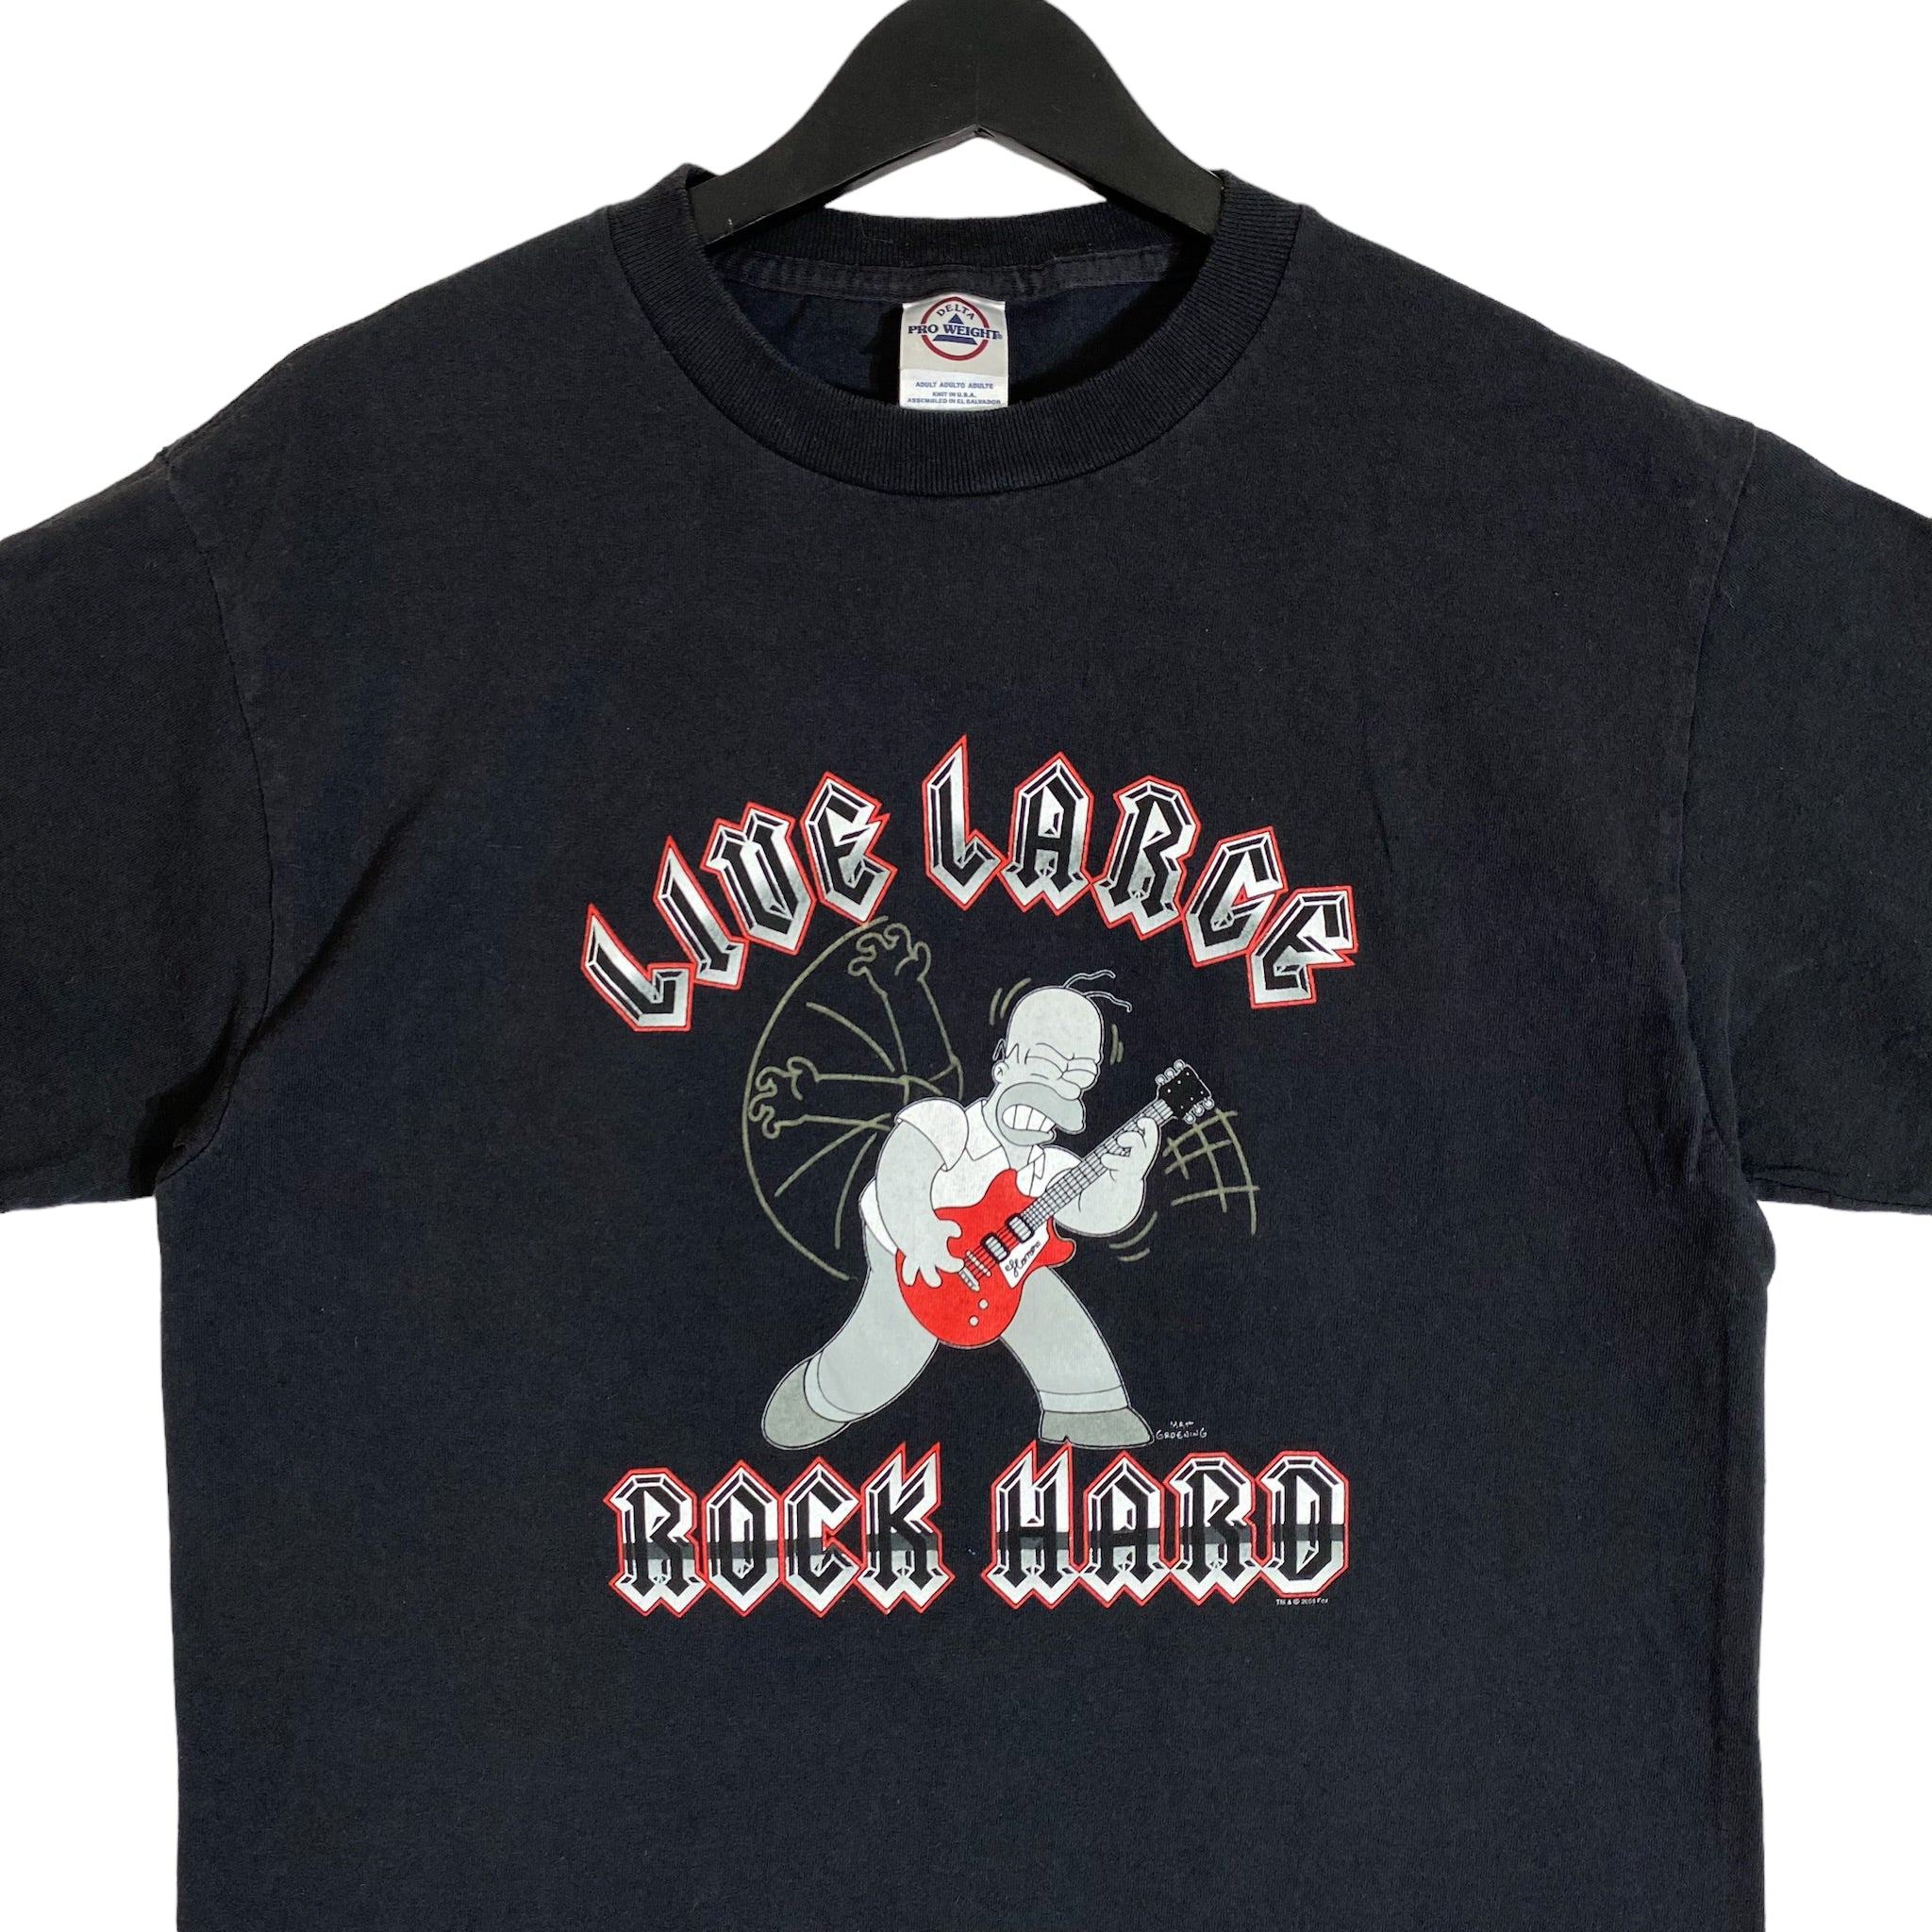 The Simpsons "Live Large Rock Hard" Shirt 2005